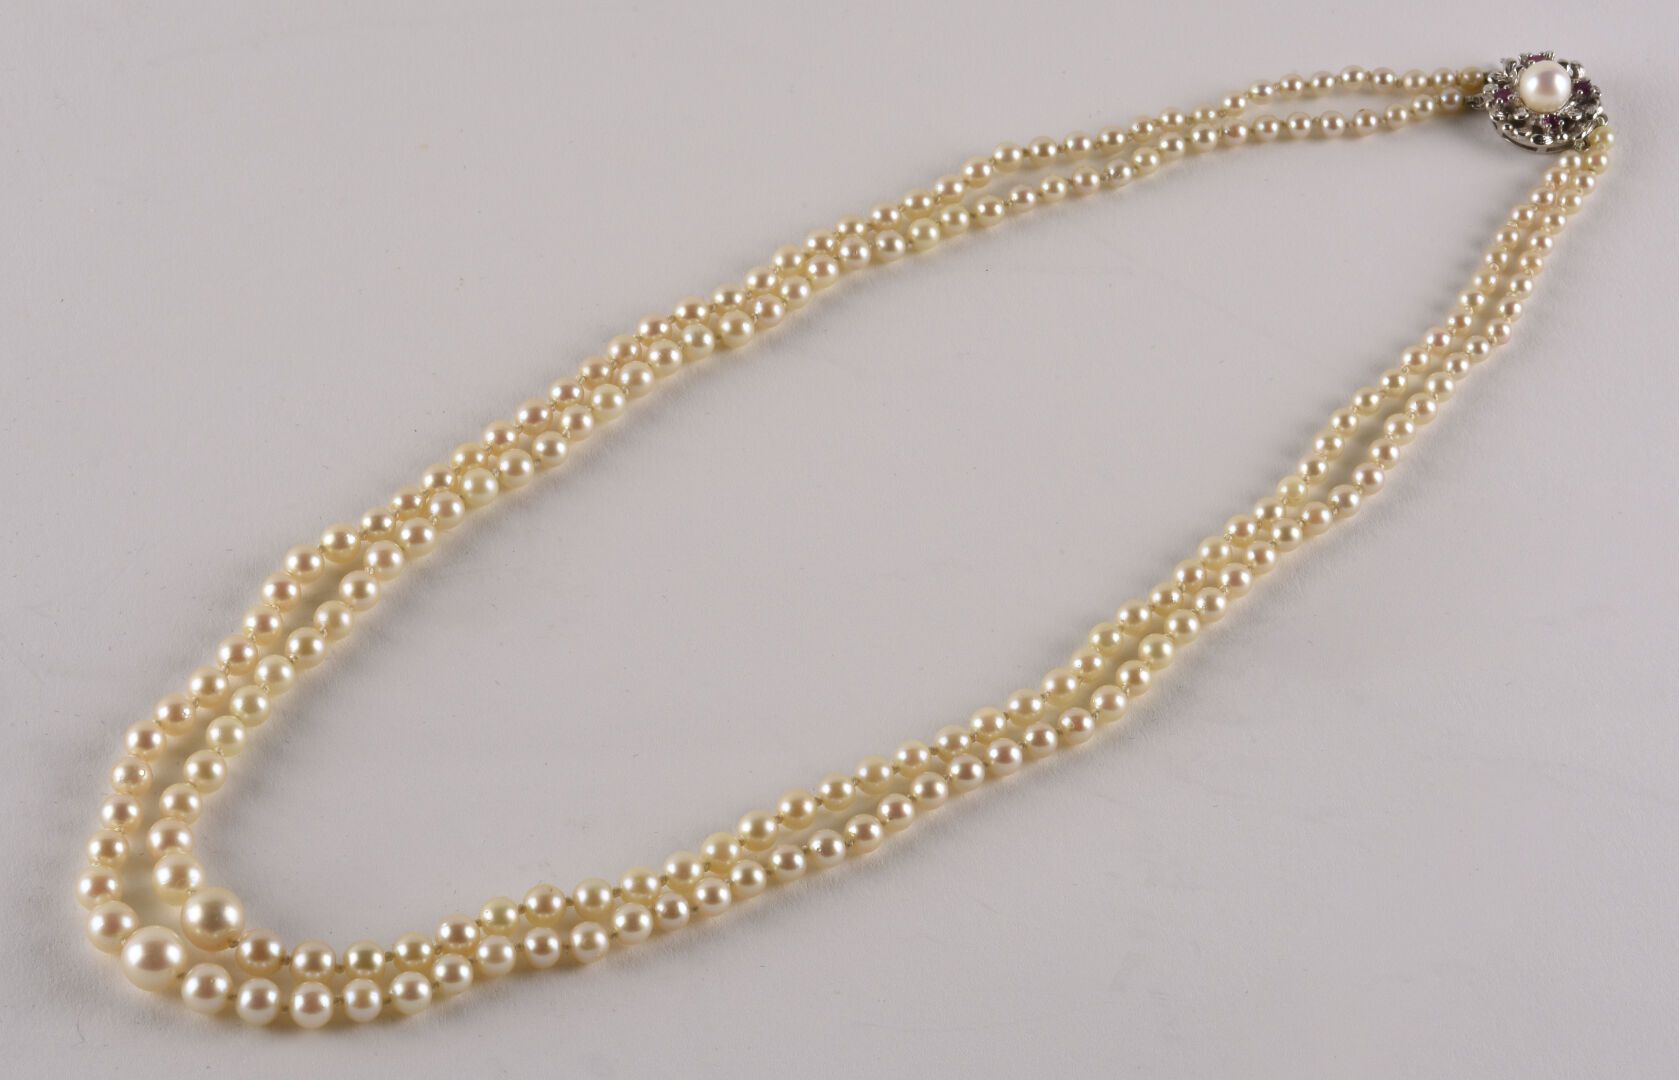 Null 一条白色养殖珍珠的双串项链。

扣子上有一个银色的花纹图案，上面有一颗珍珠和小的合成红宝石。

珍珠的直径：3.6至7.7毫米左右。